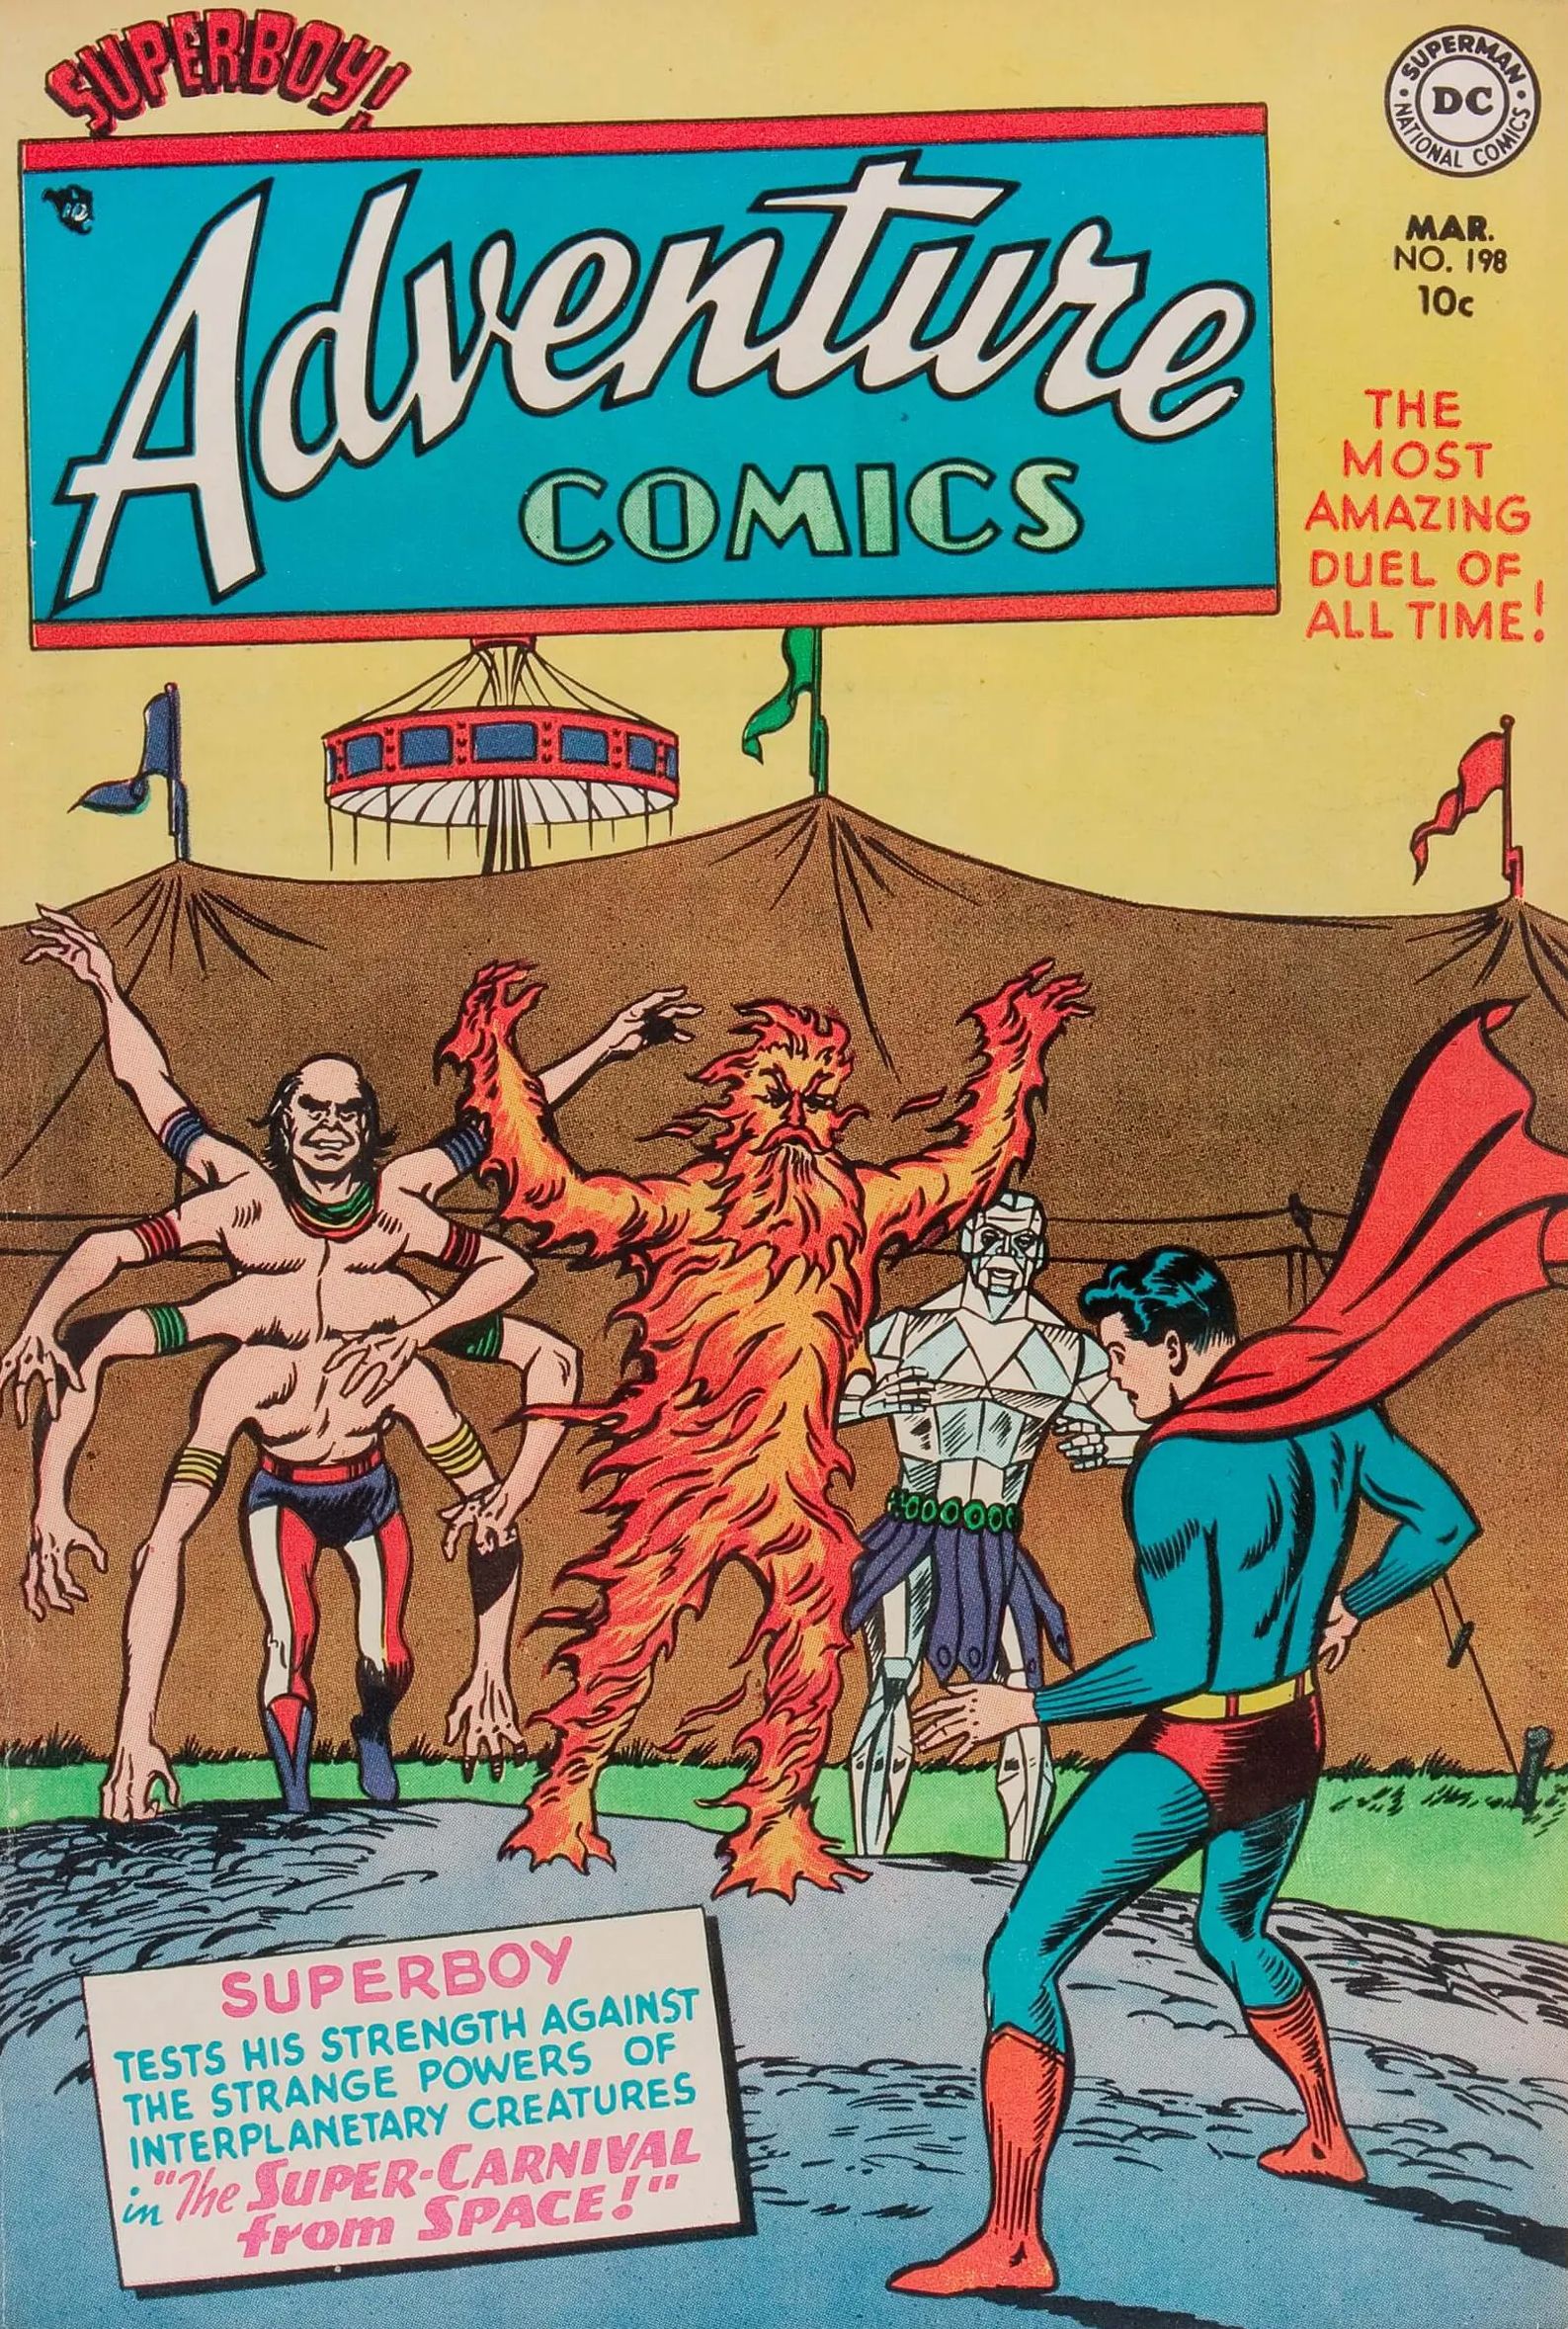 Adventure Comics #198 Comic